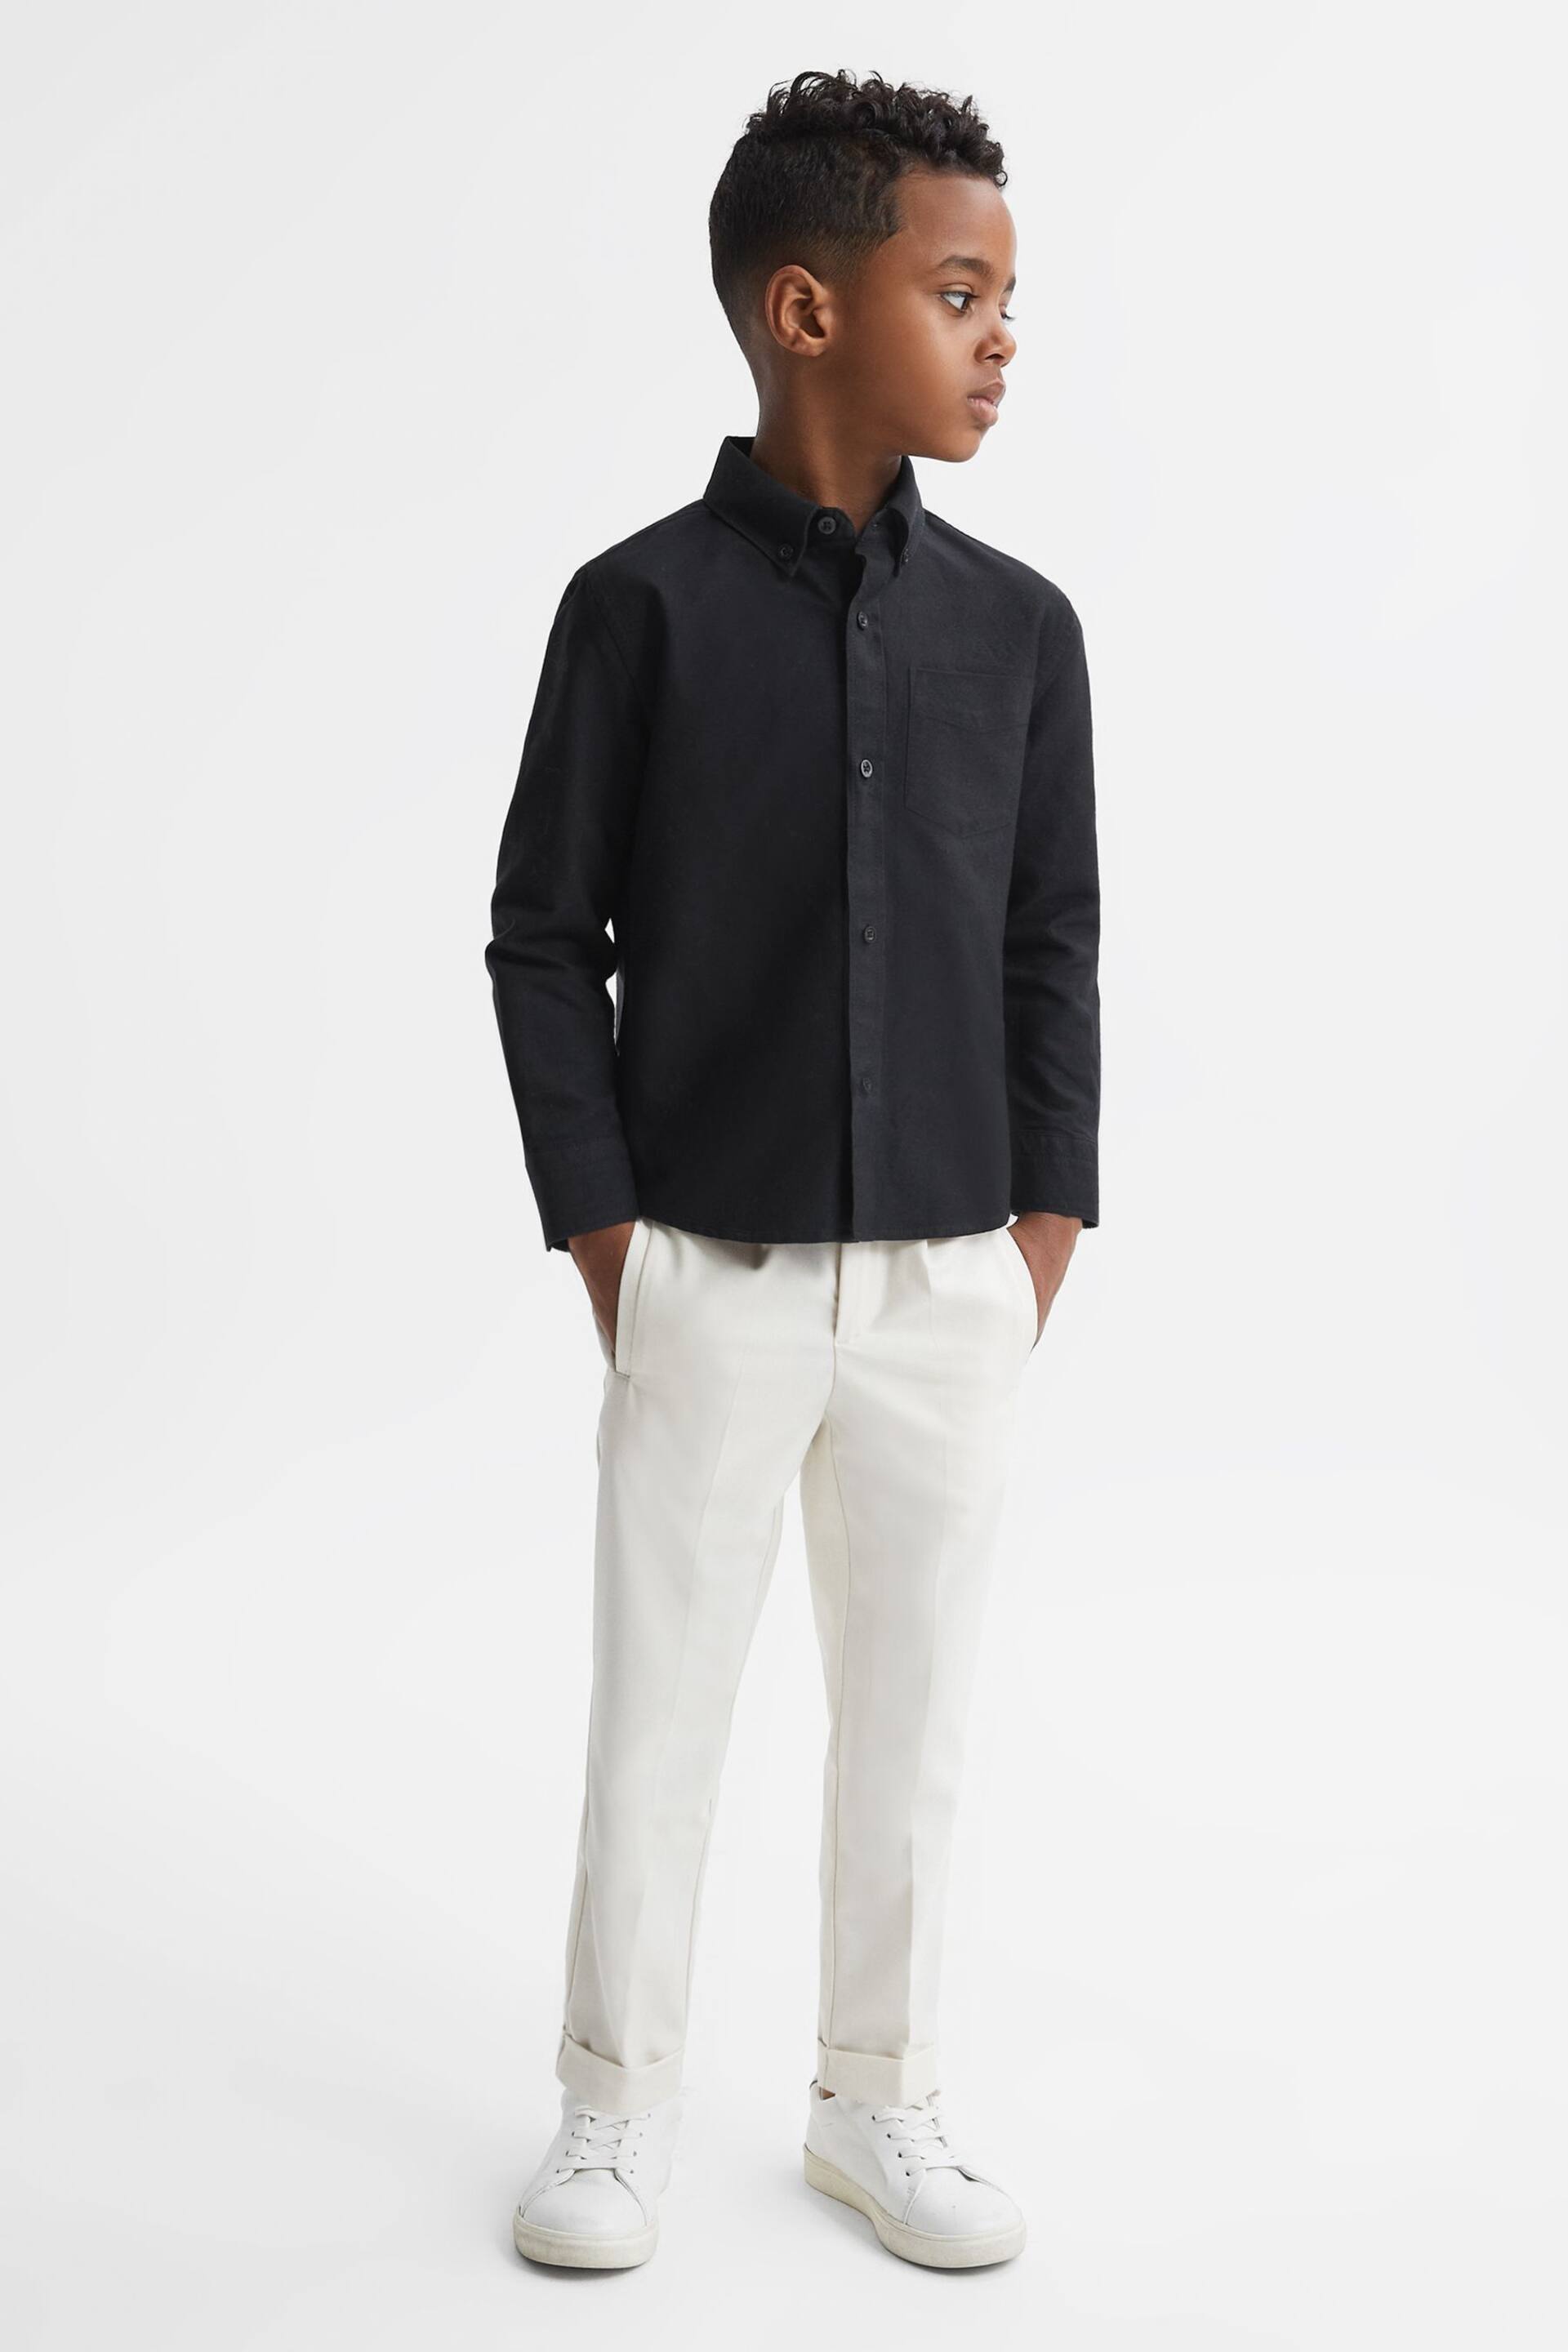 Reiss Black Greenwich Senior Slim Fit Button-Down Oxford Shirt - Image 3 of 6